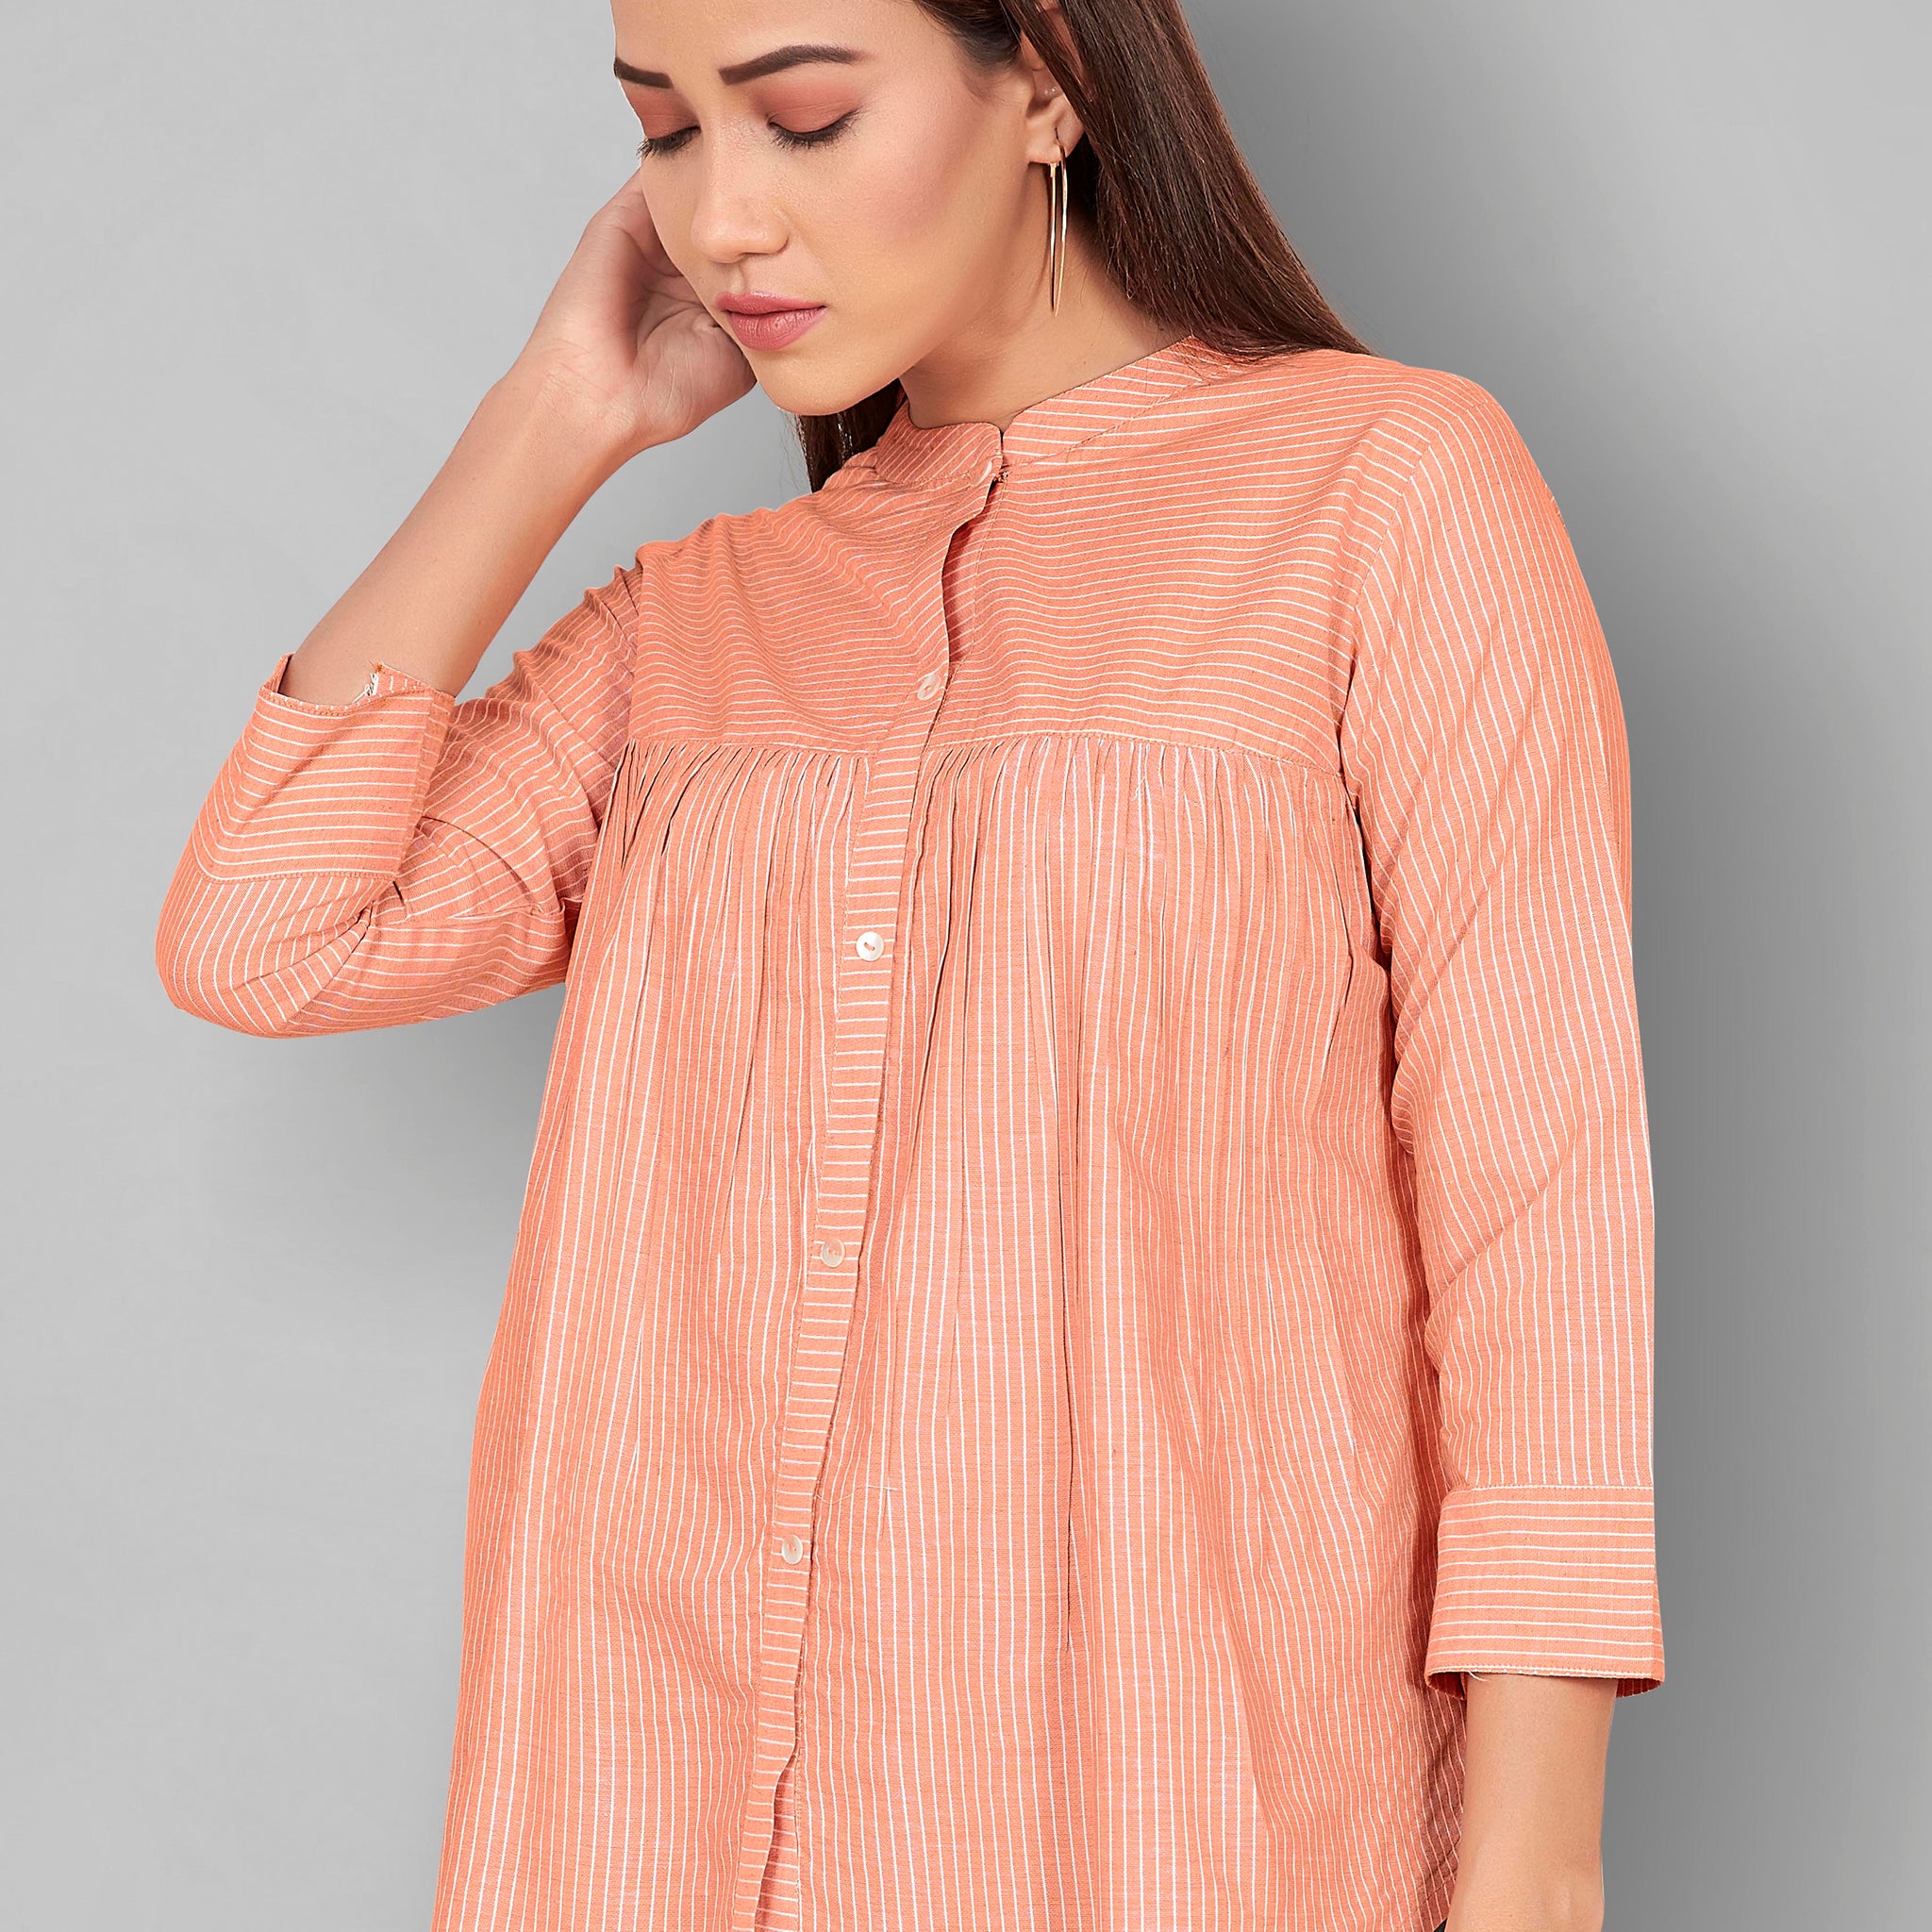 Women's Cotton Orange Stripe Printed Top